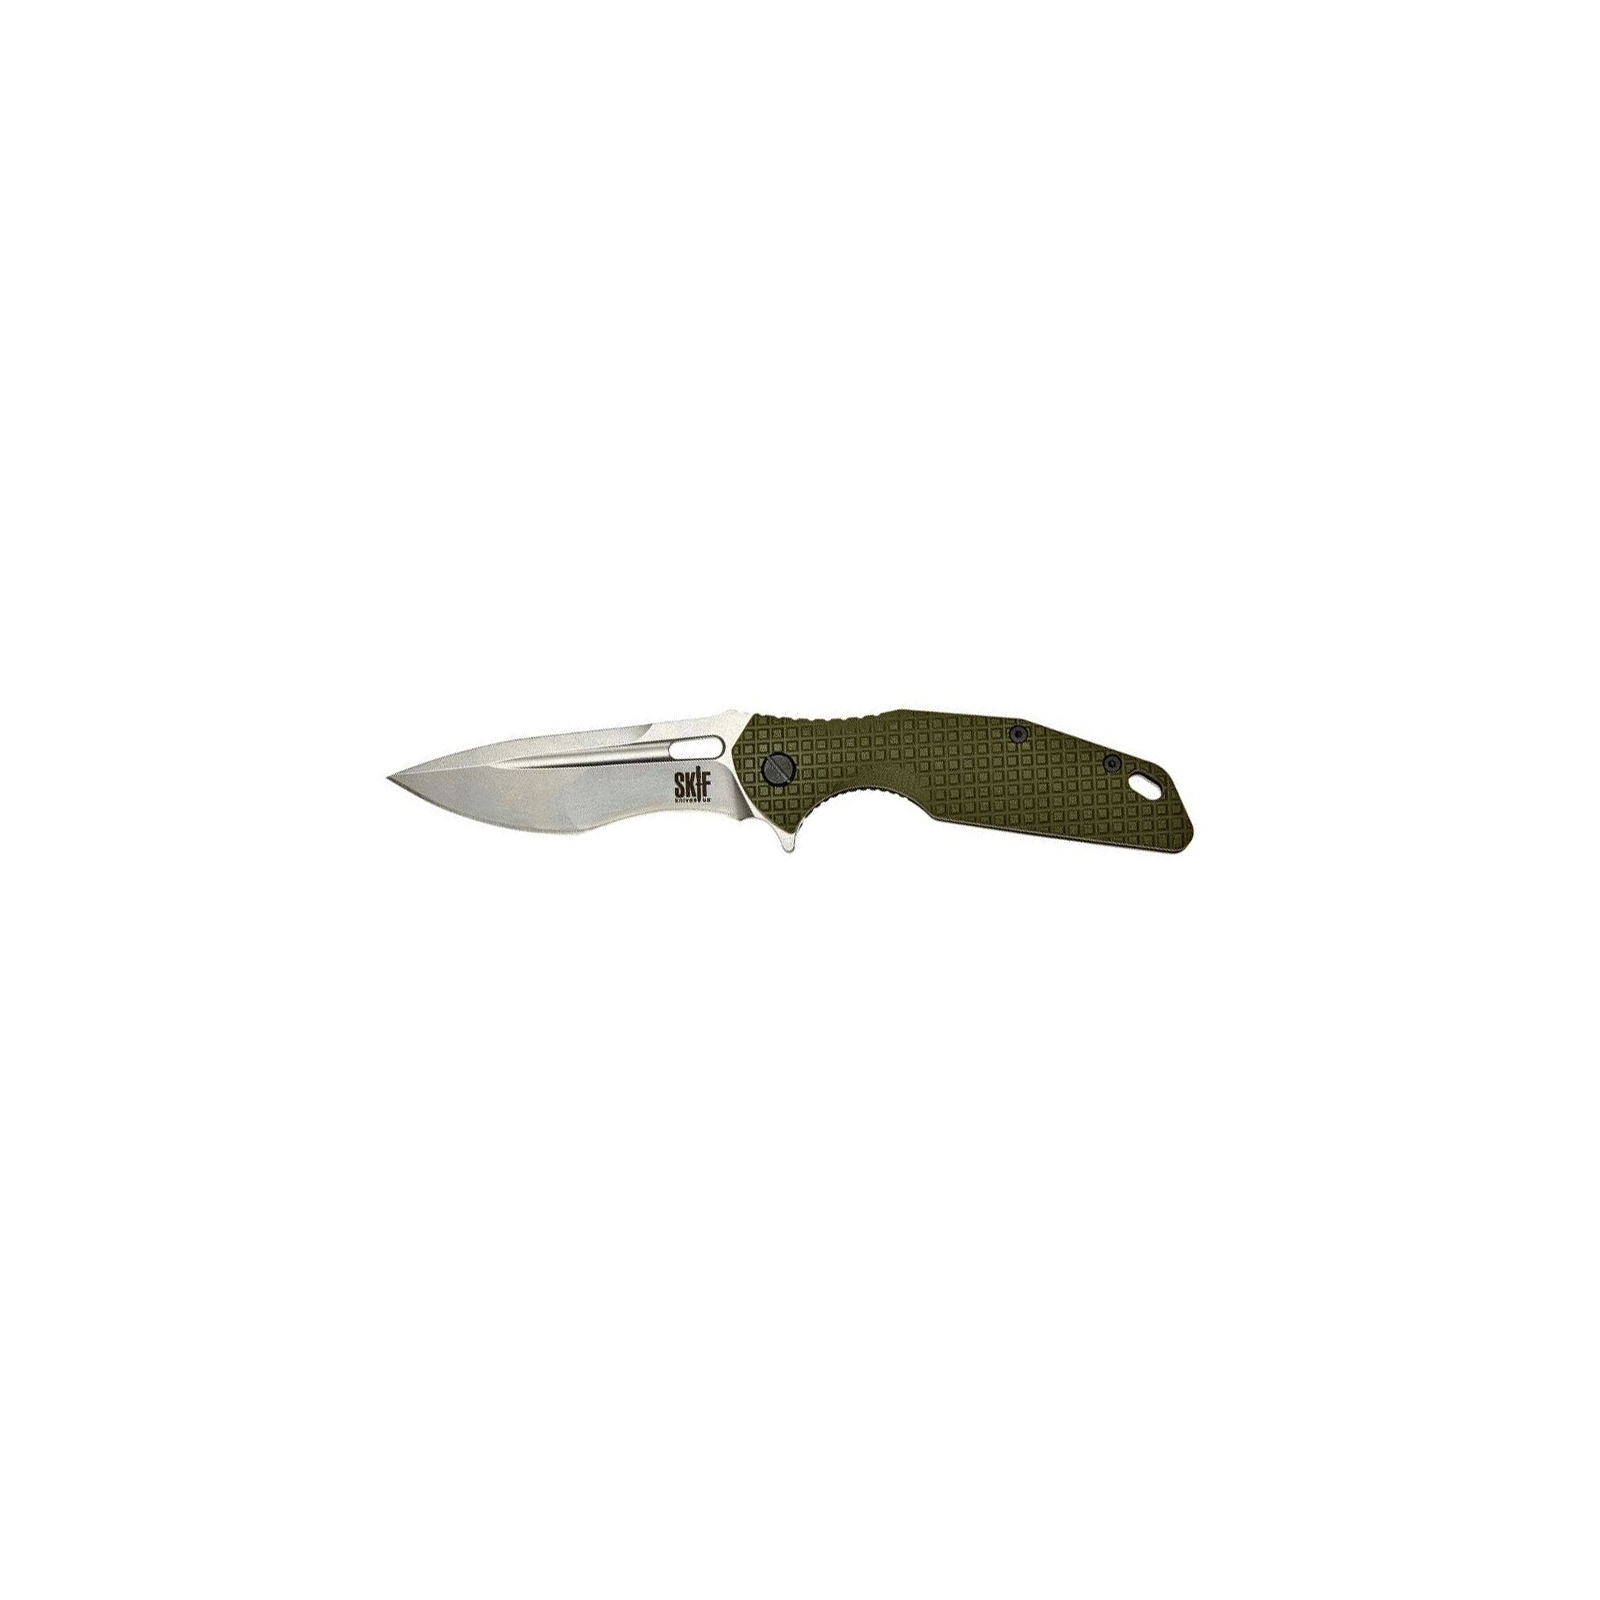 Нож Skif Defender II SW Orange (423SEOR)